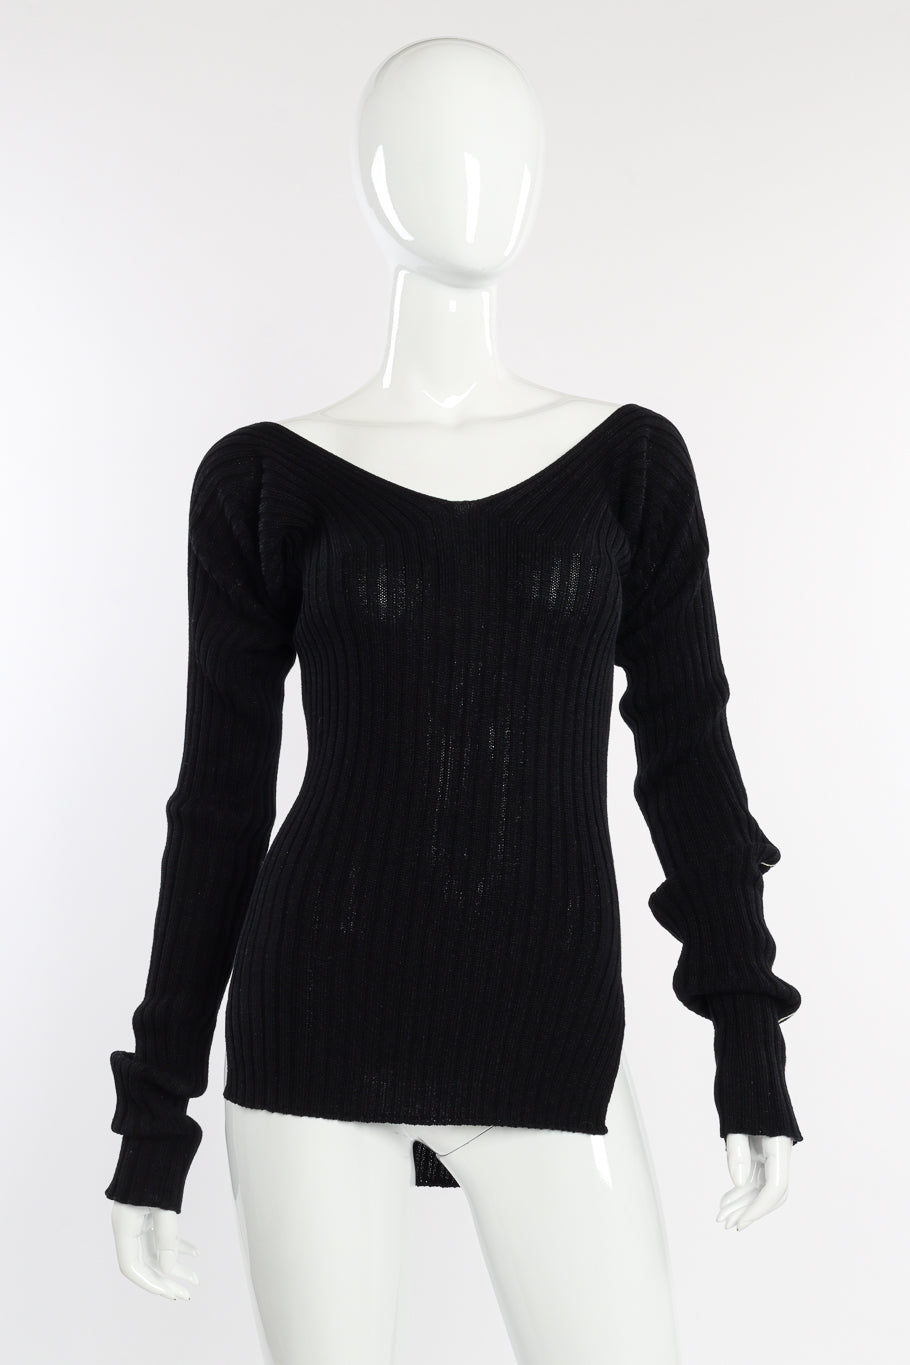 Celine Ribbed Knit Sweater Dress front on mannequin @recessla